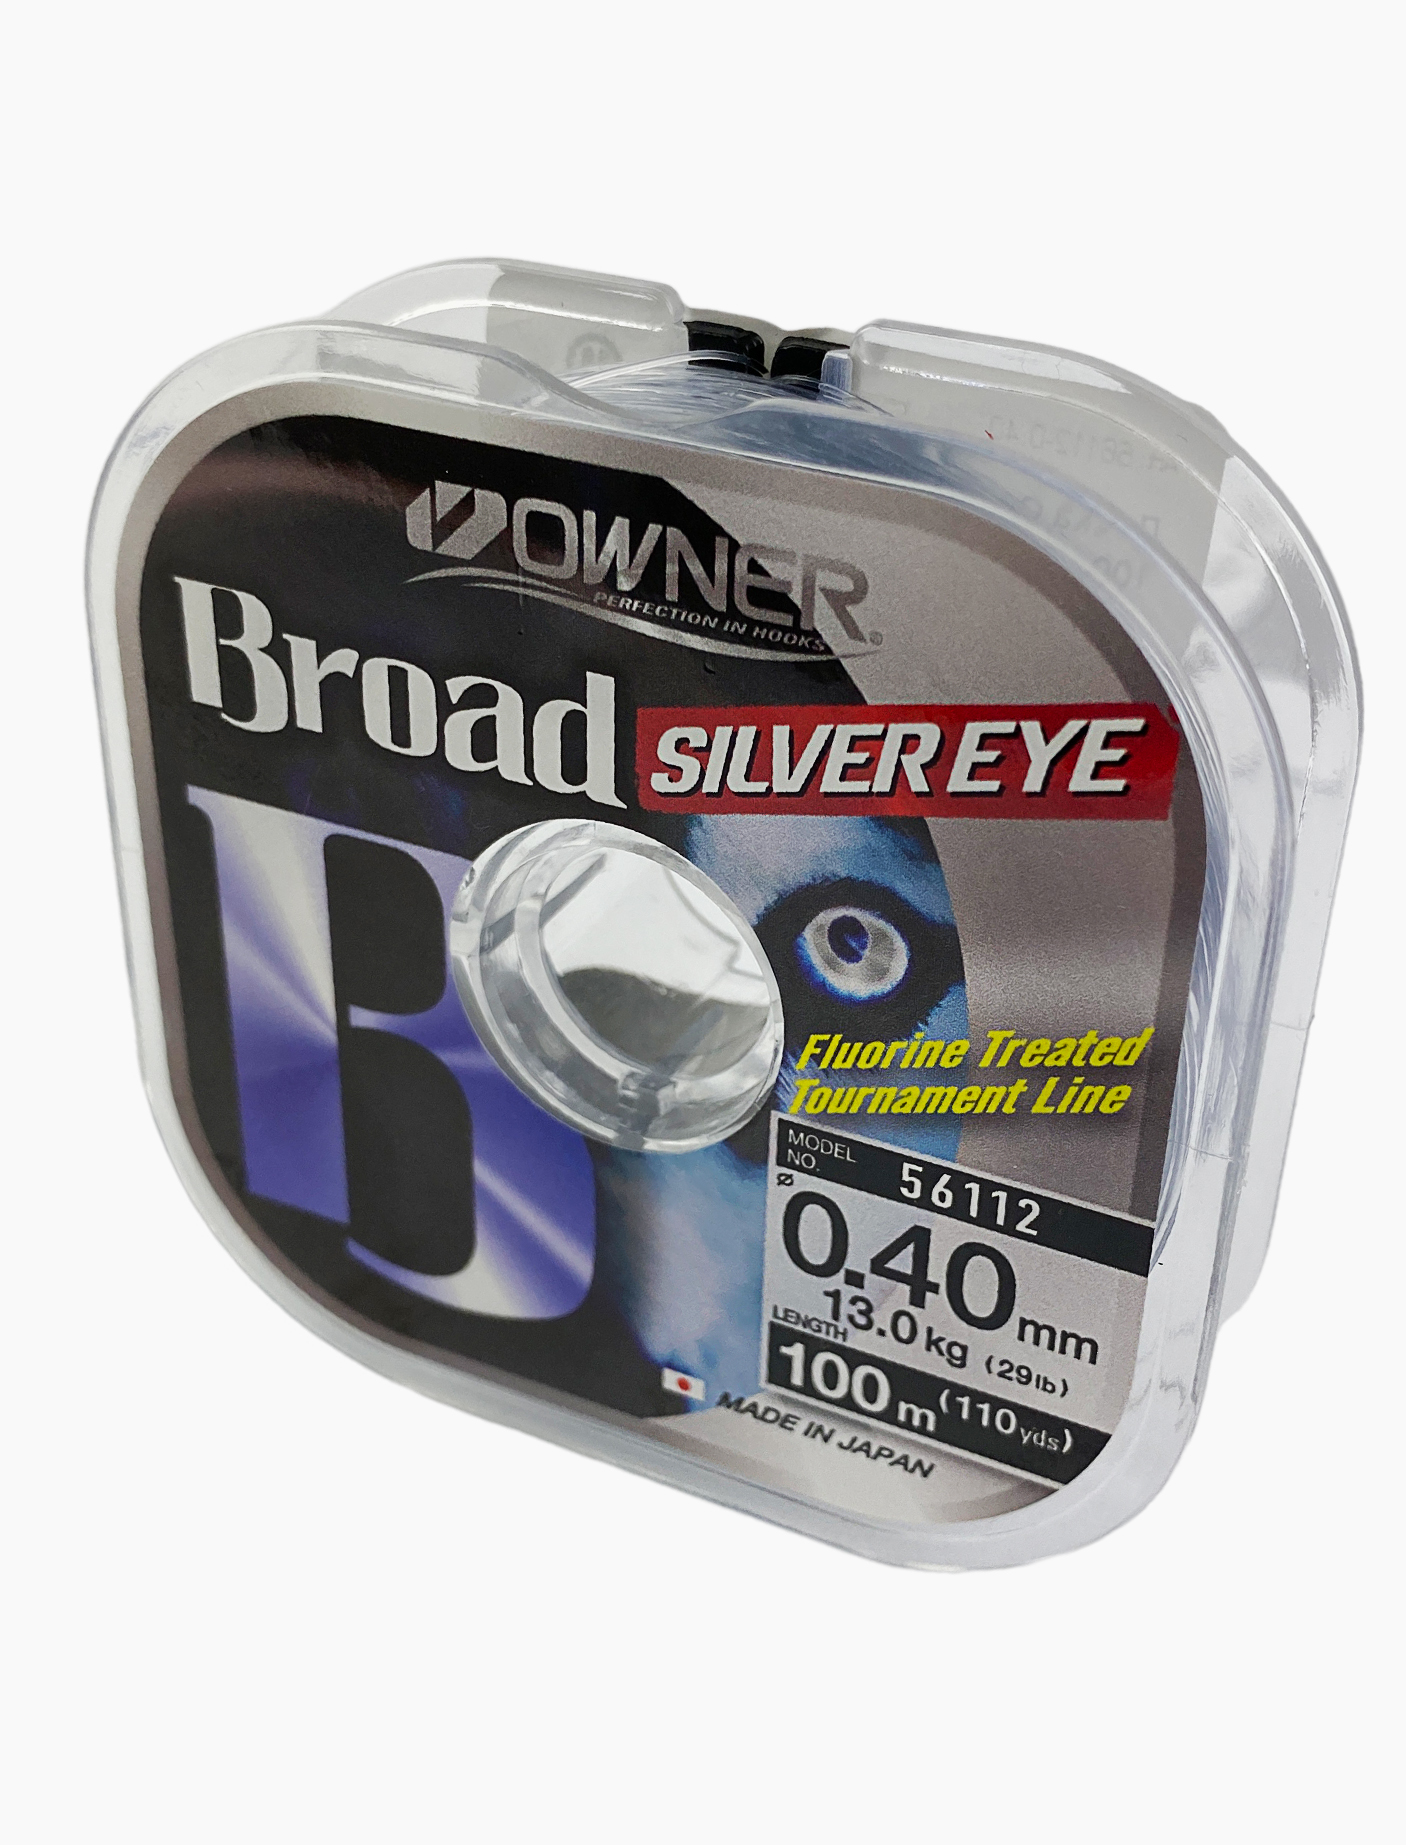 Леска Owner Broad silver eye 100м 0,40мм - фото 1